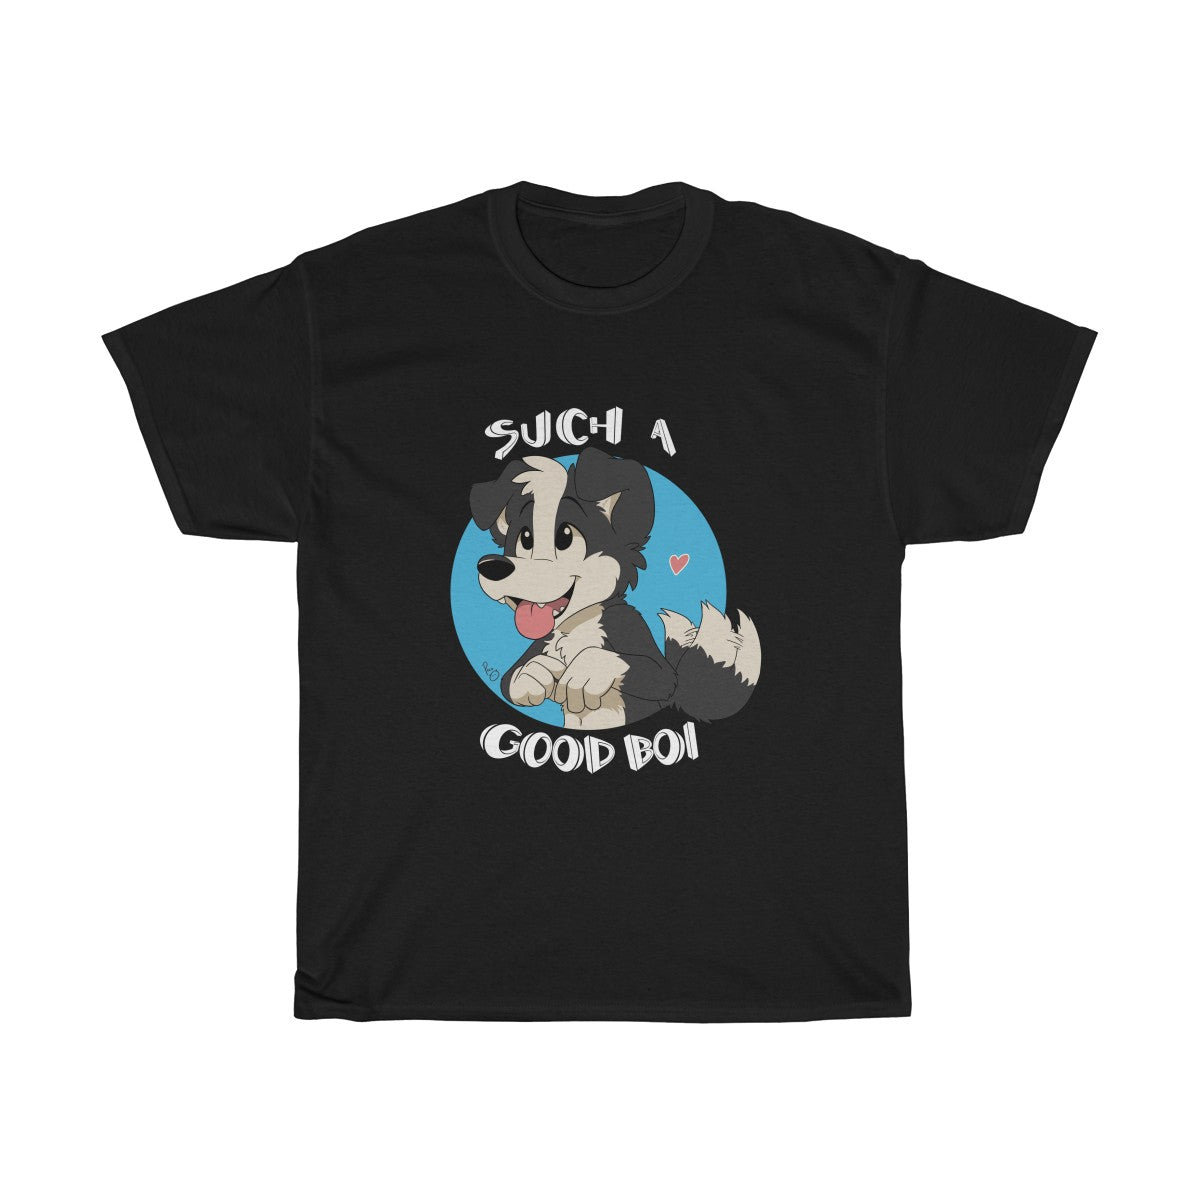 Such a Good Boy - T-Shirt T-Shirt Paco Panda Black S 